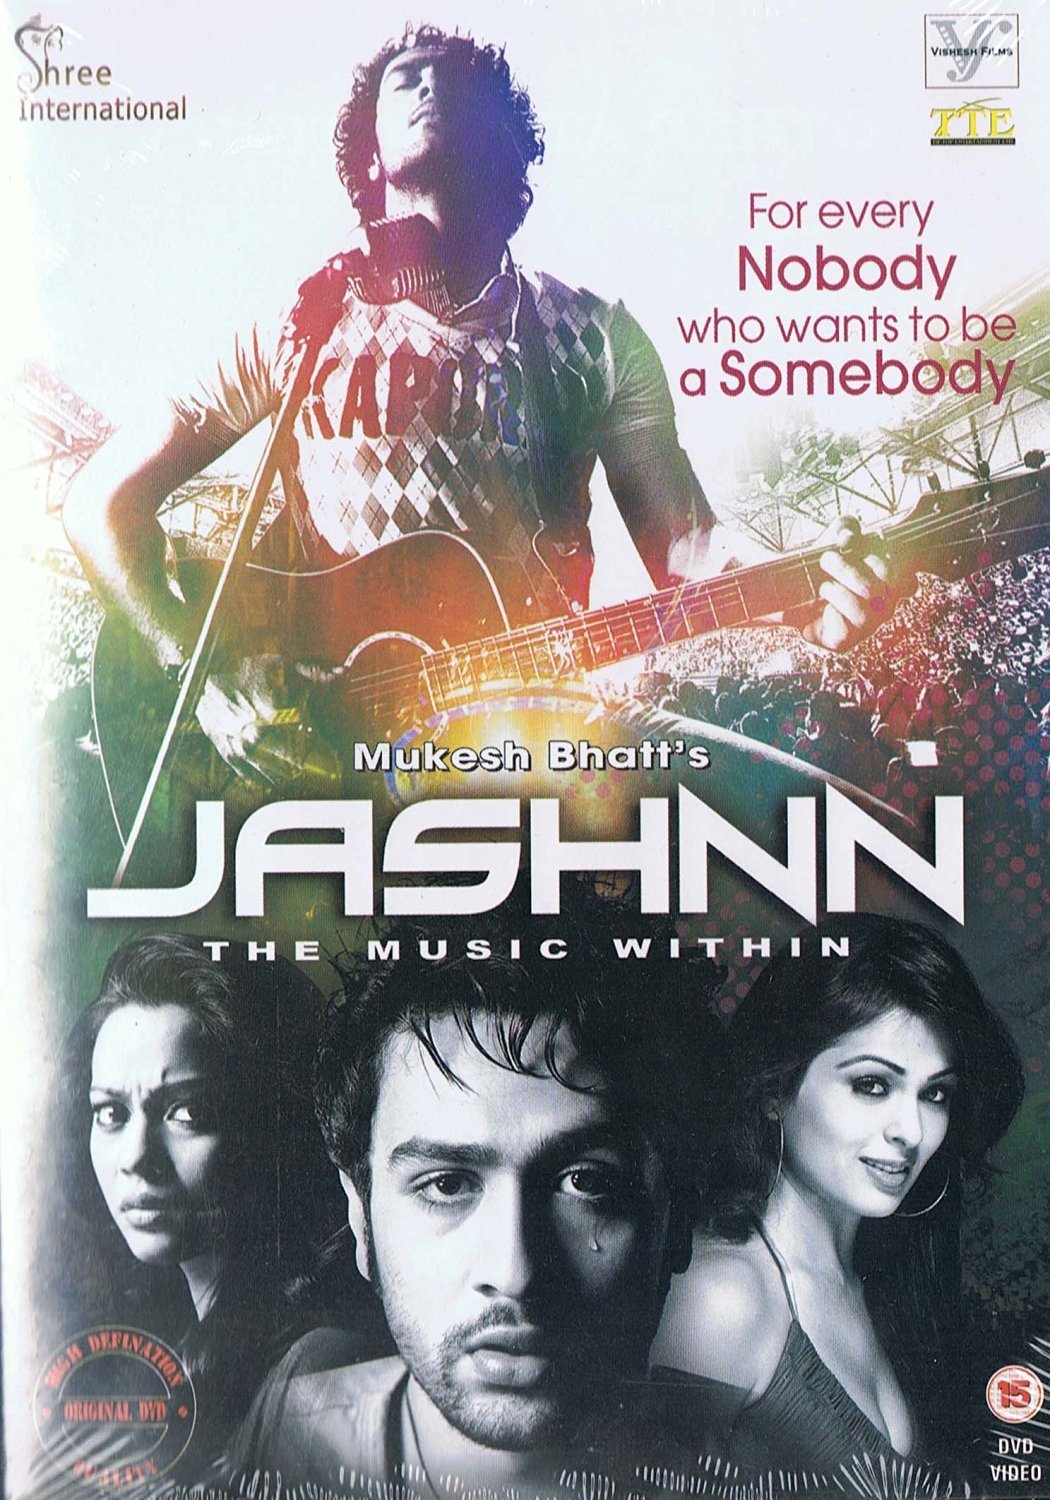 Музыка в душе / Jashnn: The Music Within  (2009) DVDRip